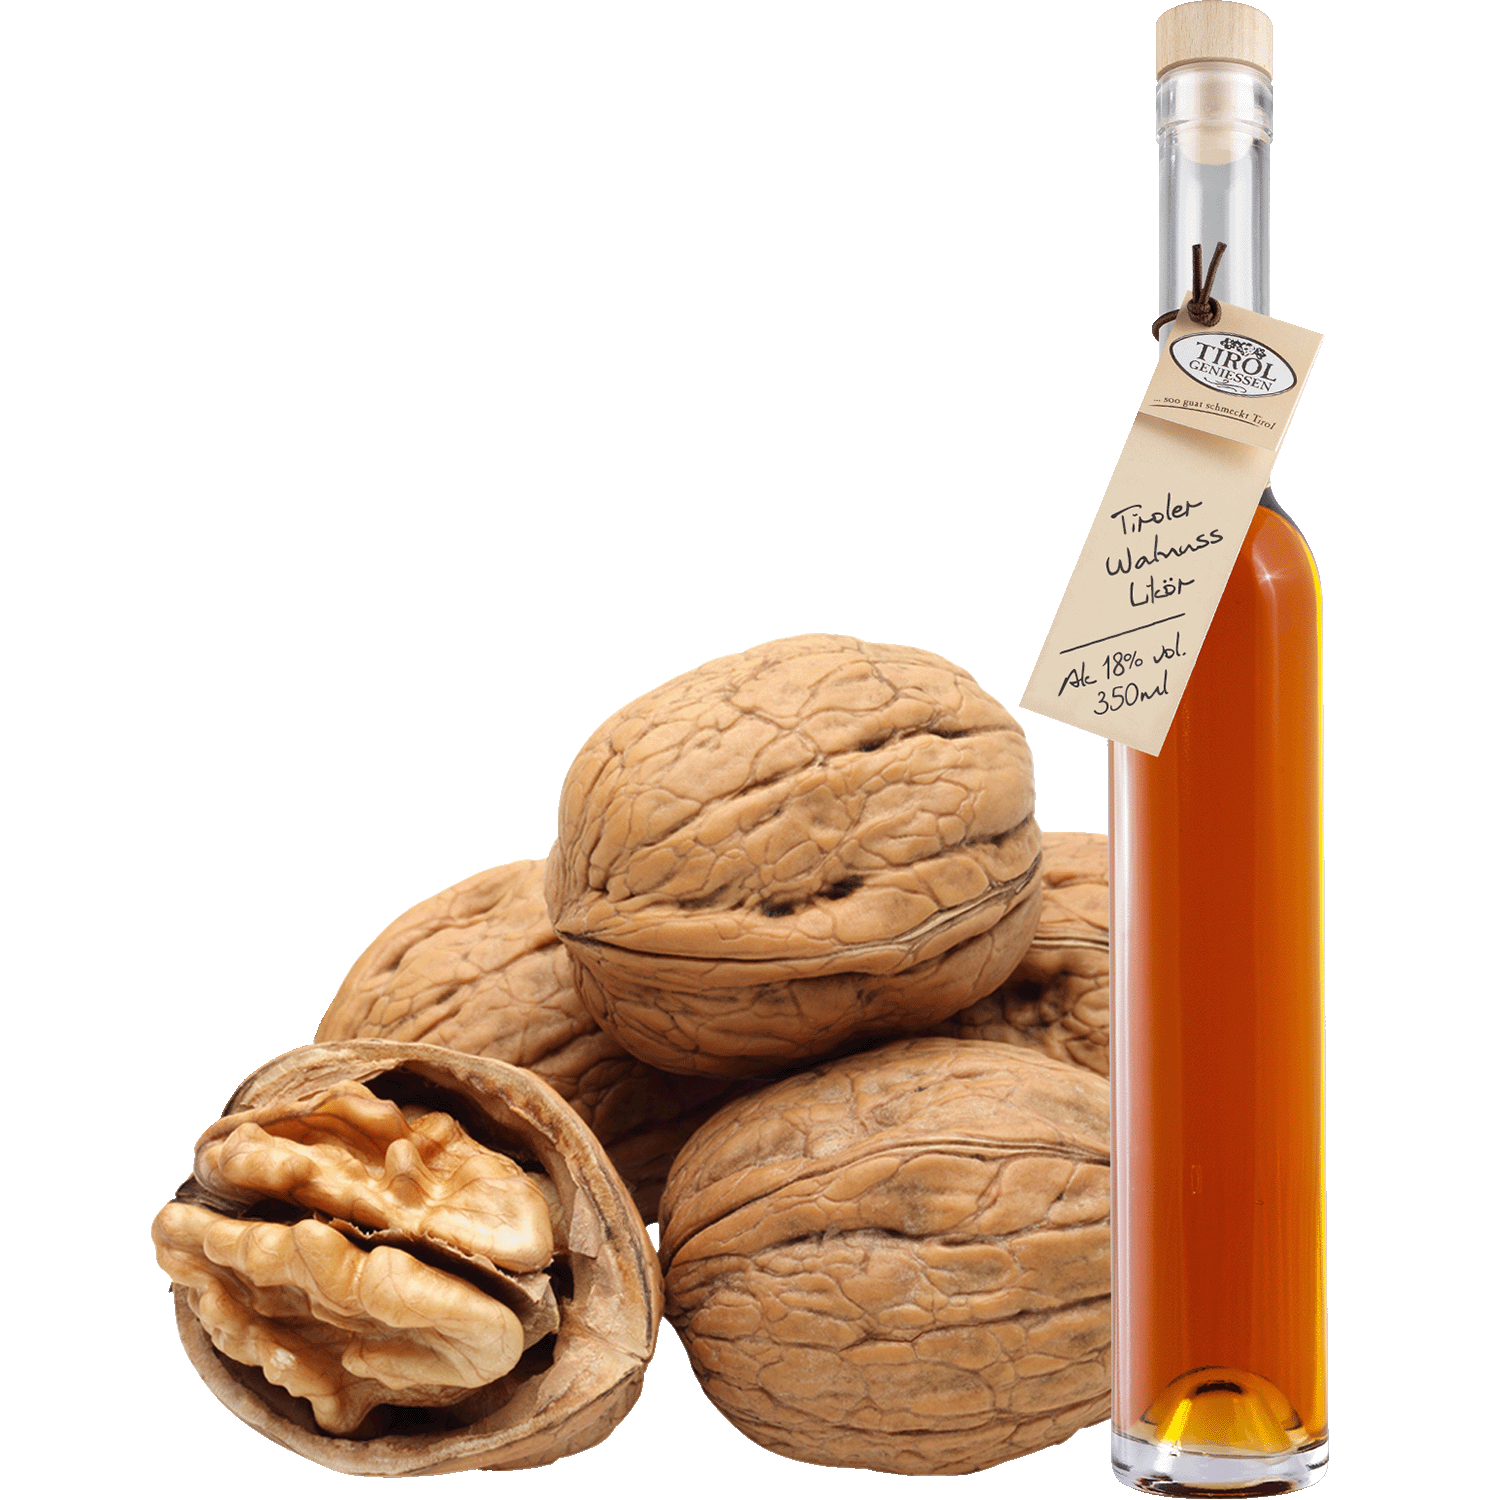 Walnut Liqueur in gift bottle from Austria from Tirol Geniessen